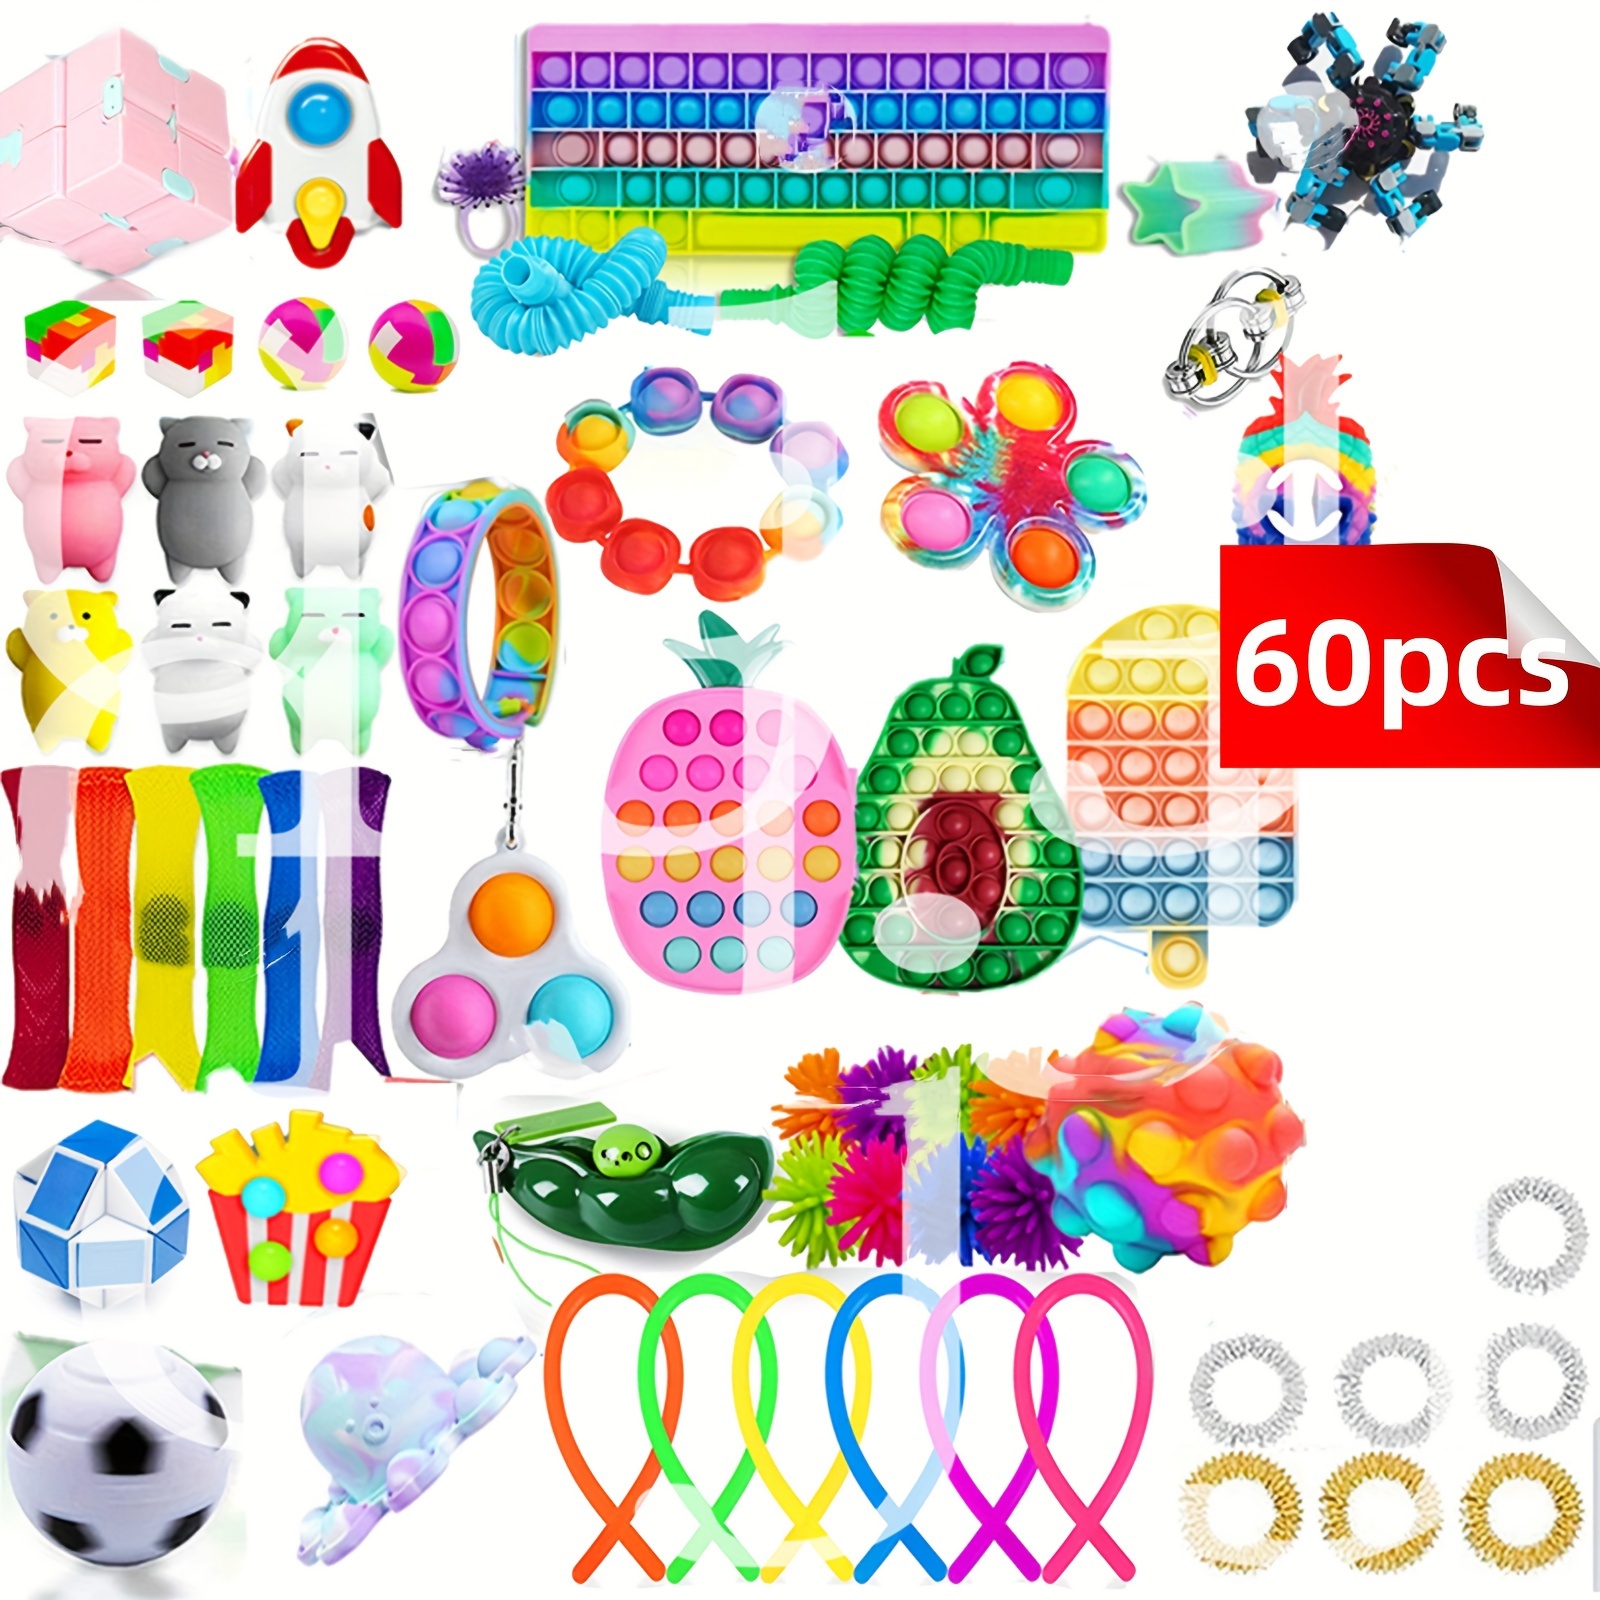 3-100pcs Random Fidget Toys Mystery Gifts Pack Kids Party Christmas